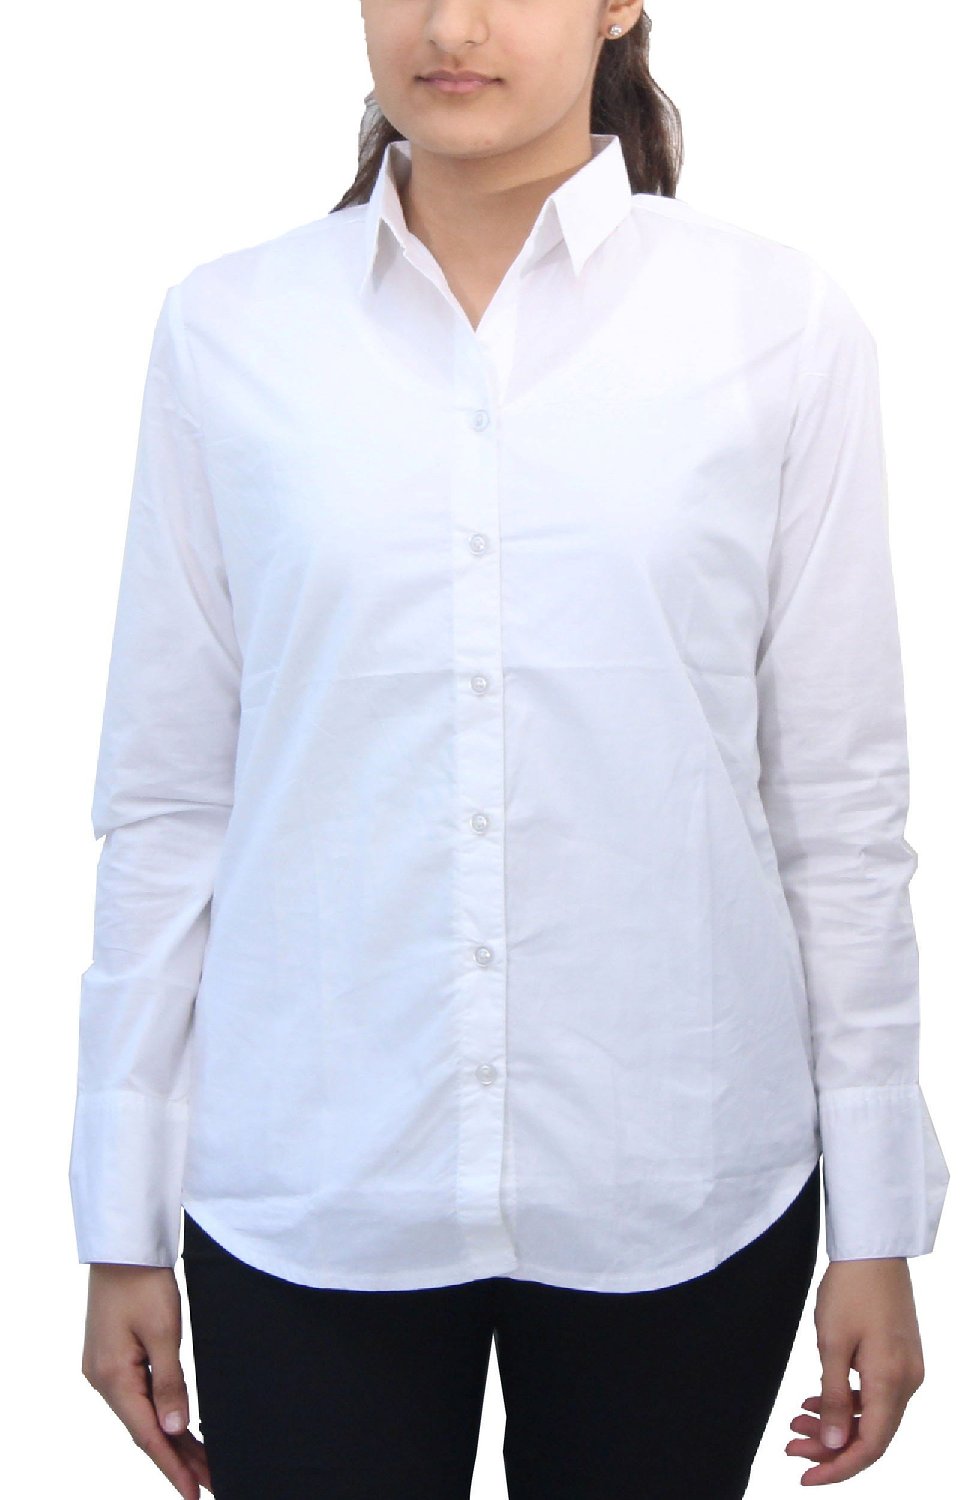 Buy women white formal shirt Online @ ₹495 from ShopClues